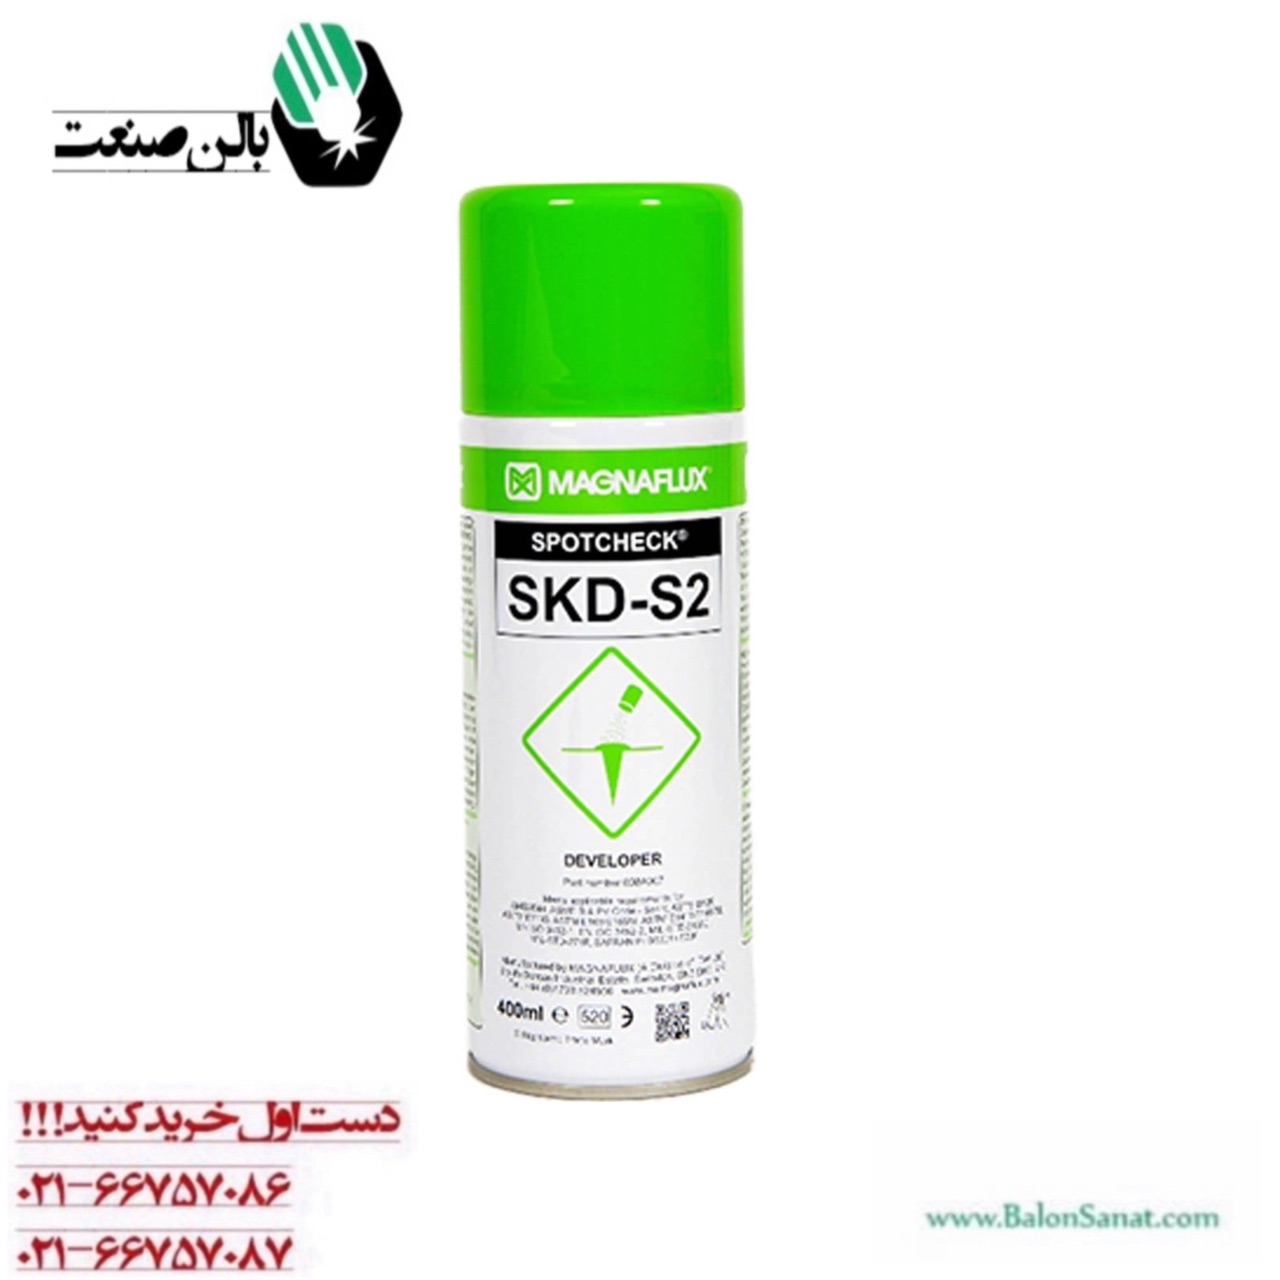 اسپری پاک کننده مدل Developer مگنافلاکس SKD-S2 اصلی